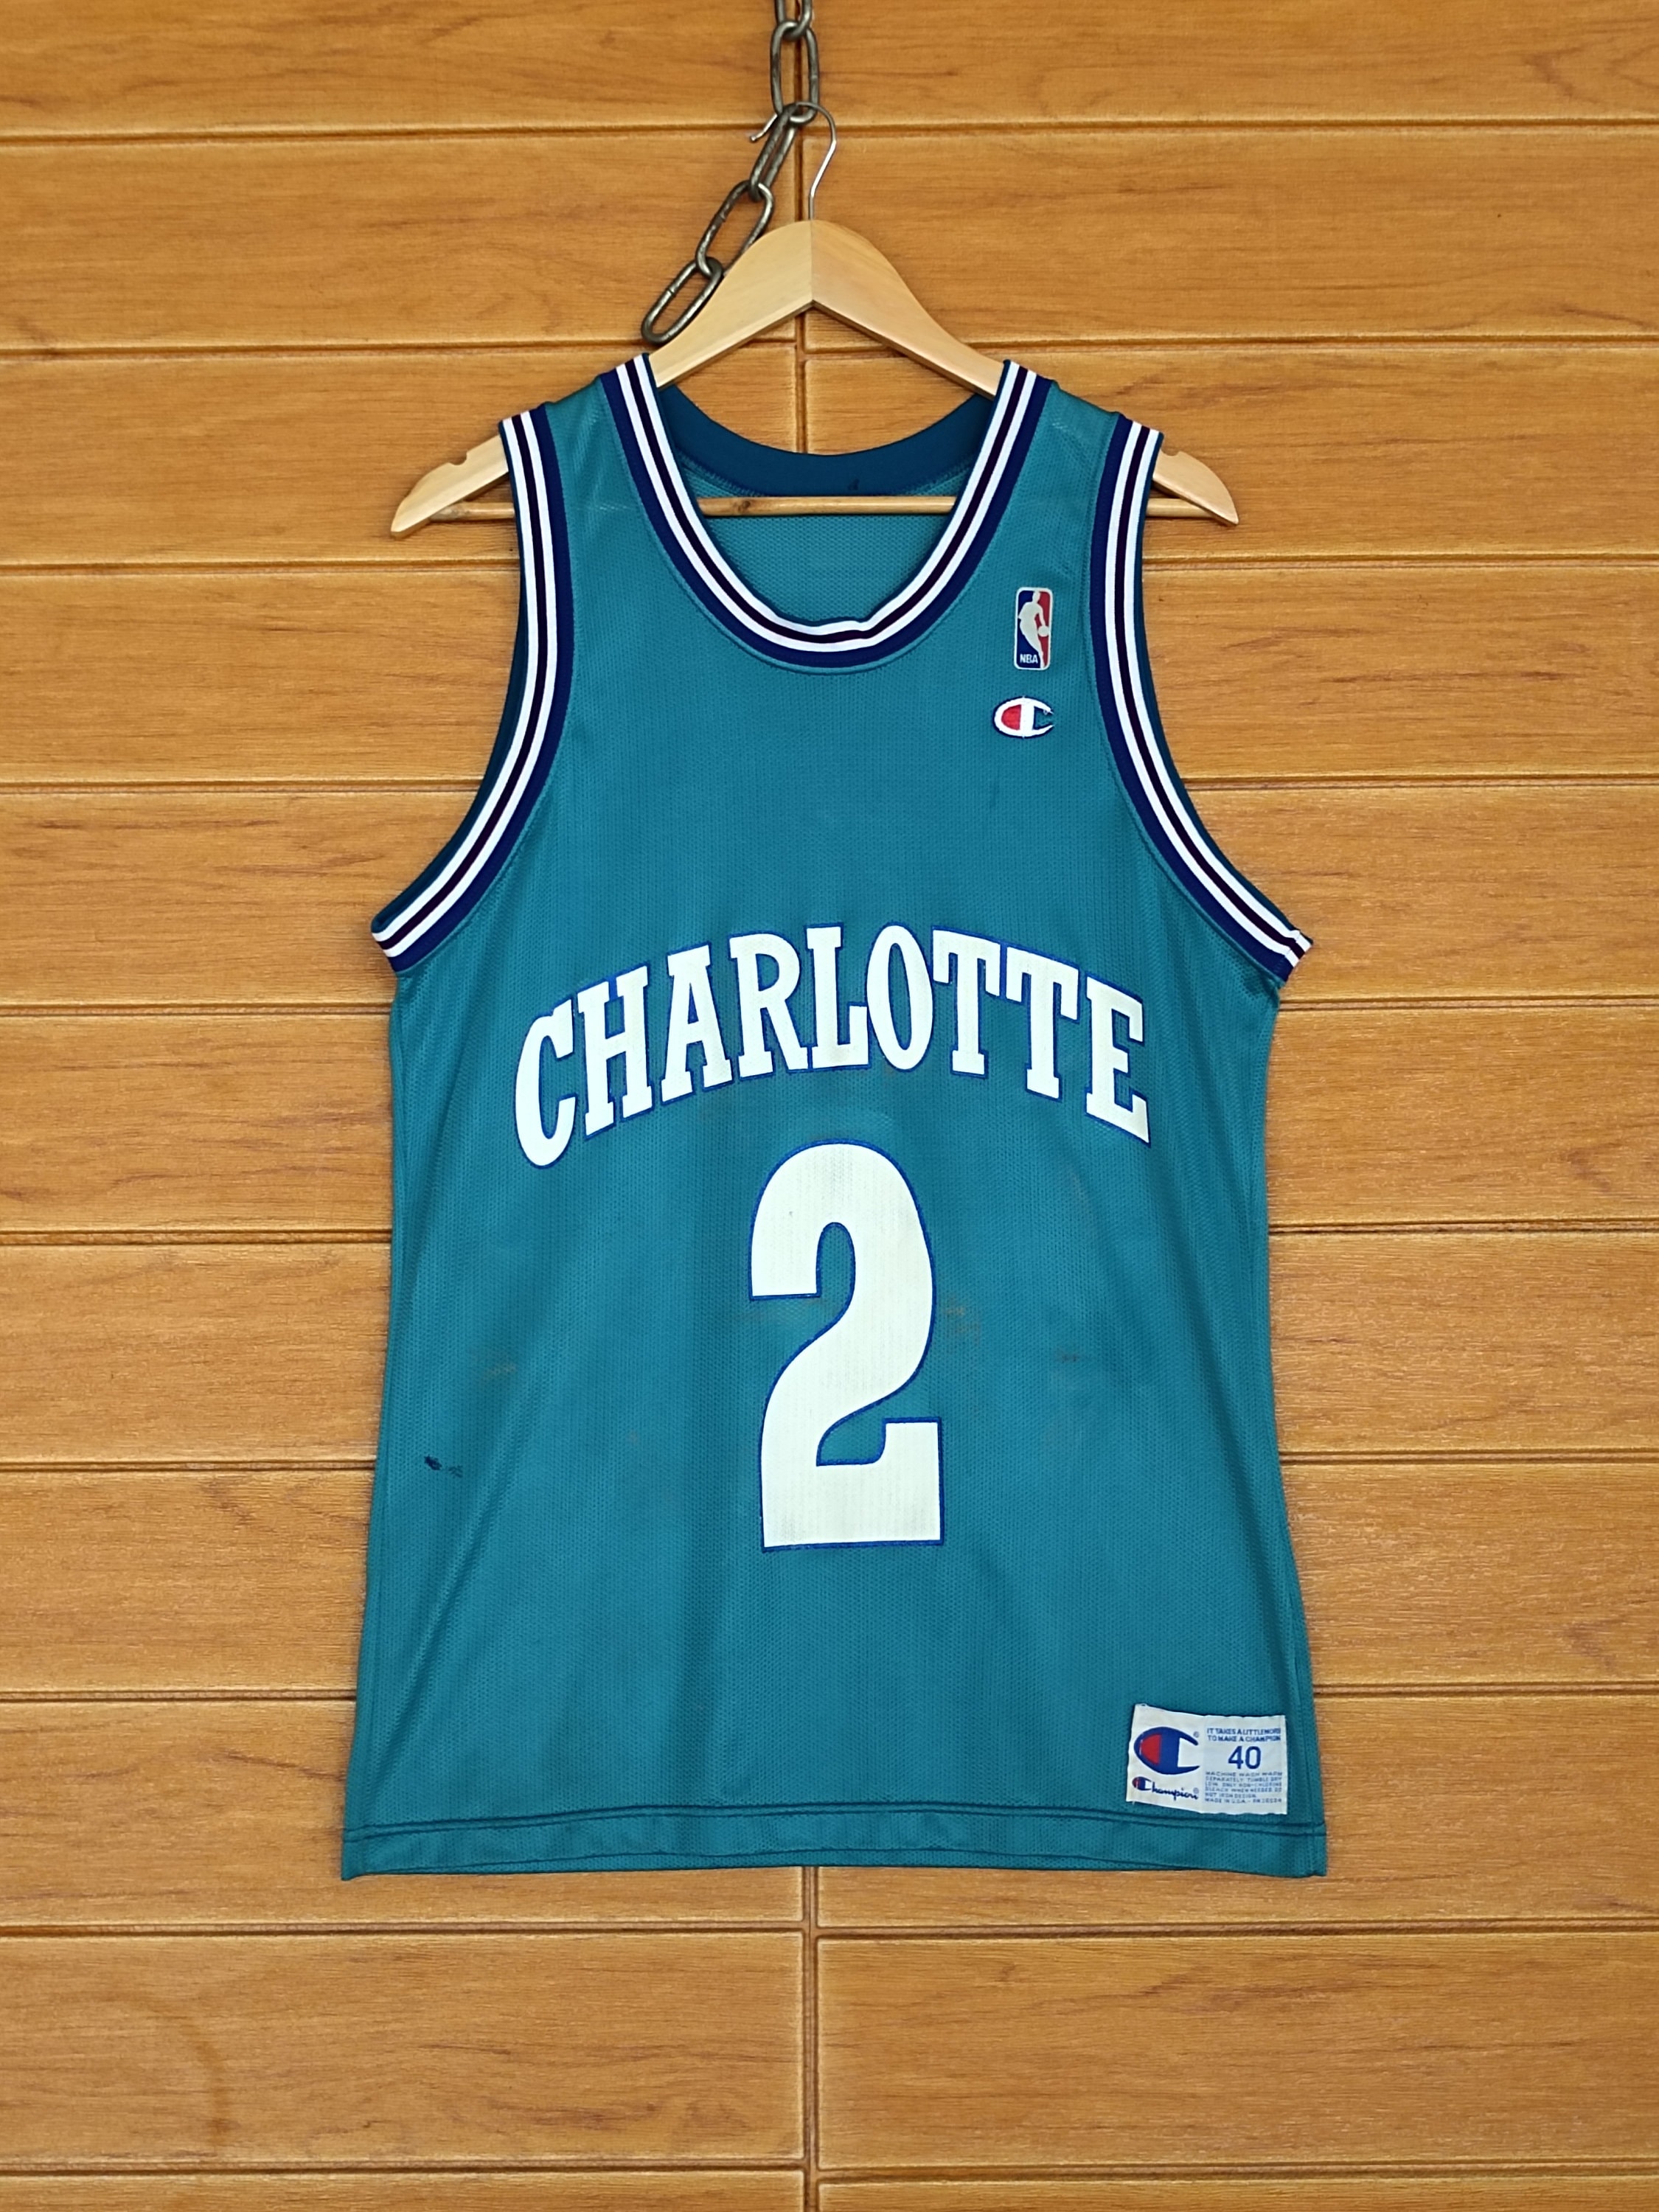 NBA Throwback Jerseys - Charlotte Hornets Larry Johnson & more